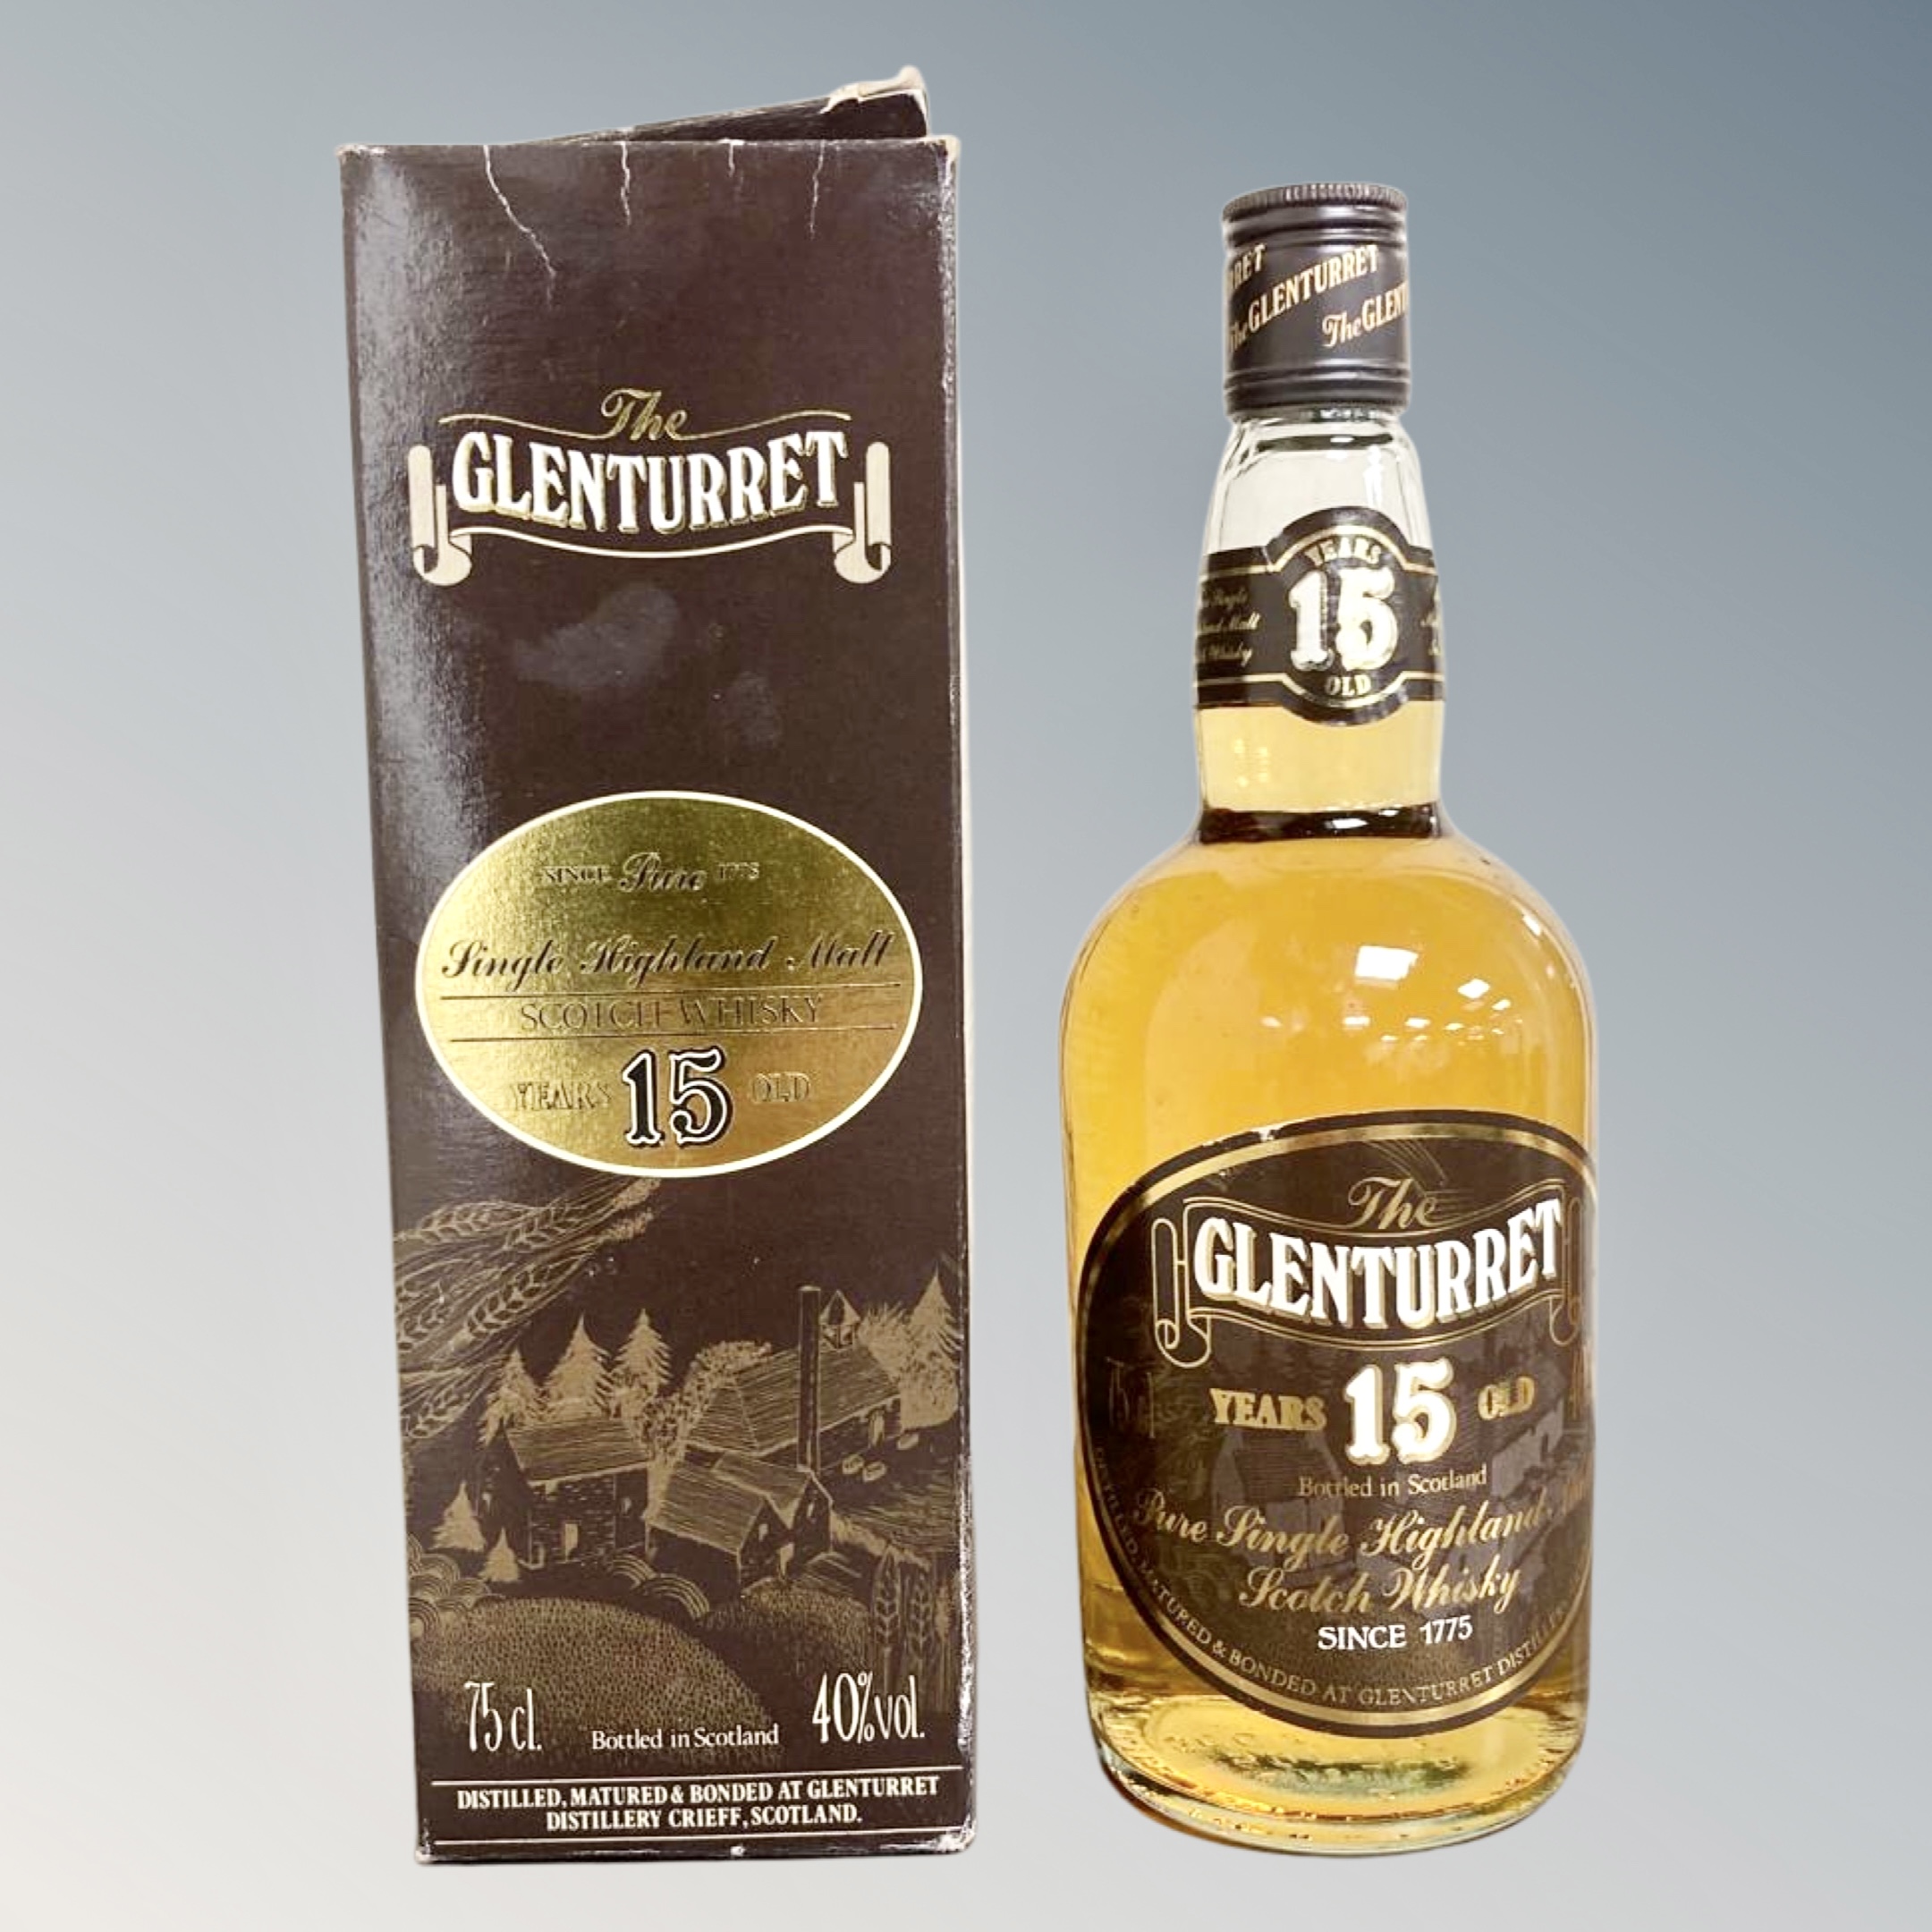 The Glenturret single Highland Malt Scotch Whisky aged 15 years, 75cl, boxed.